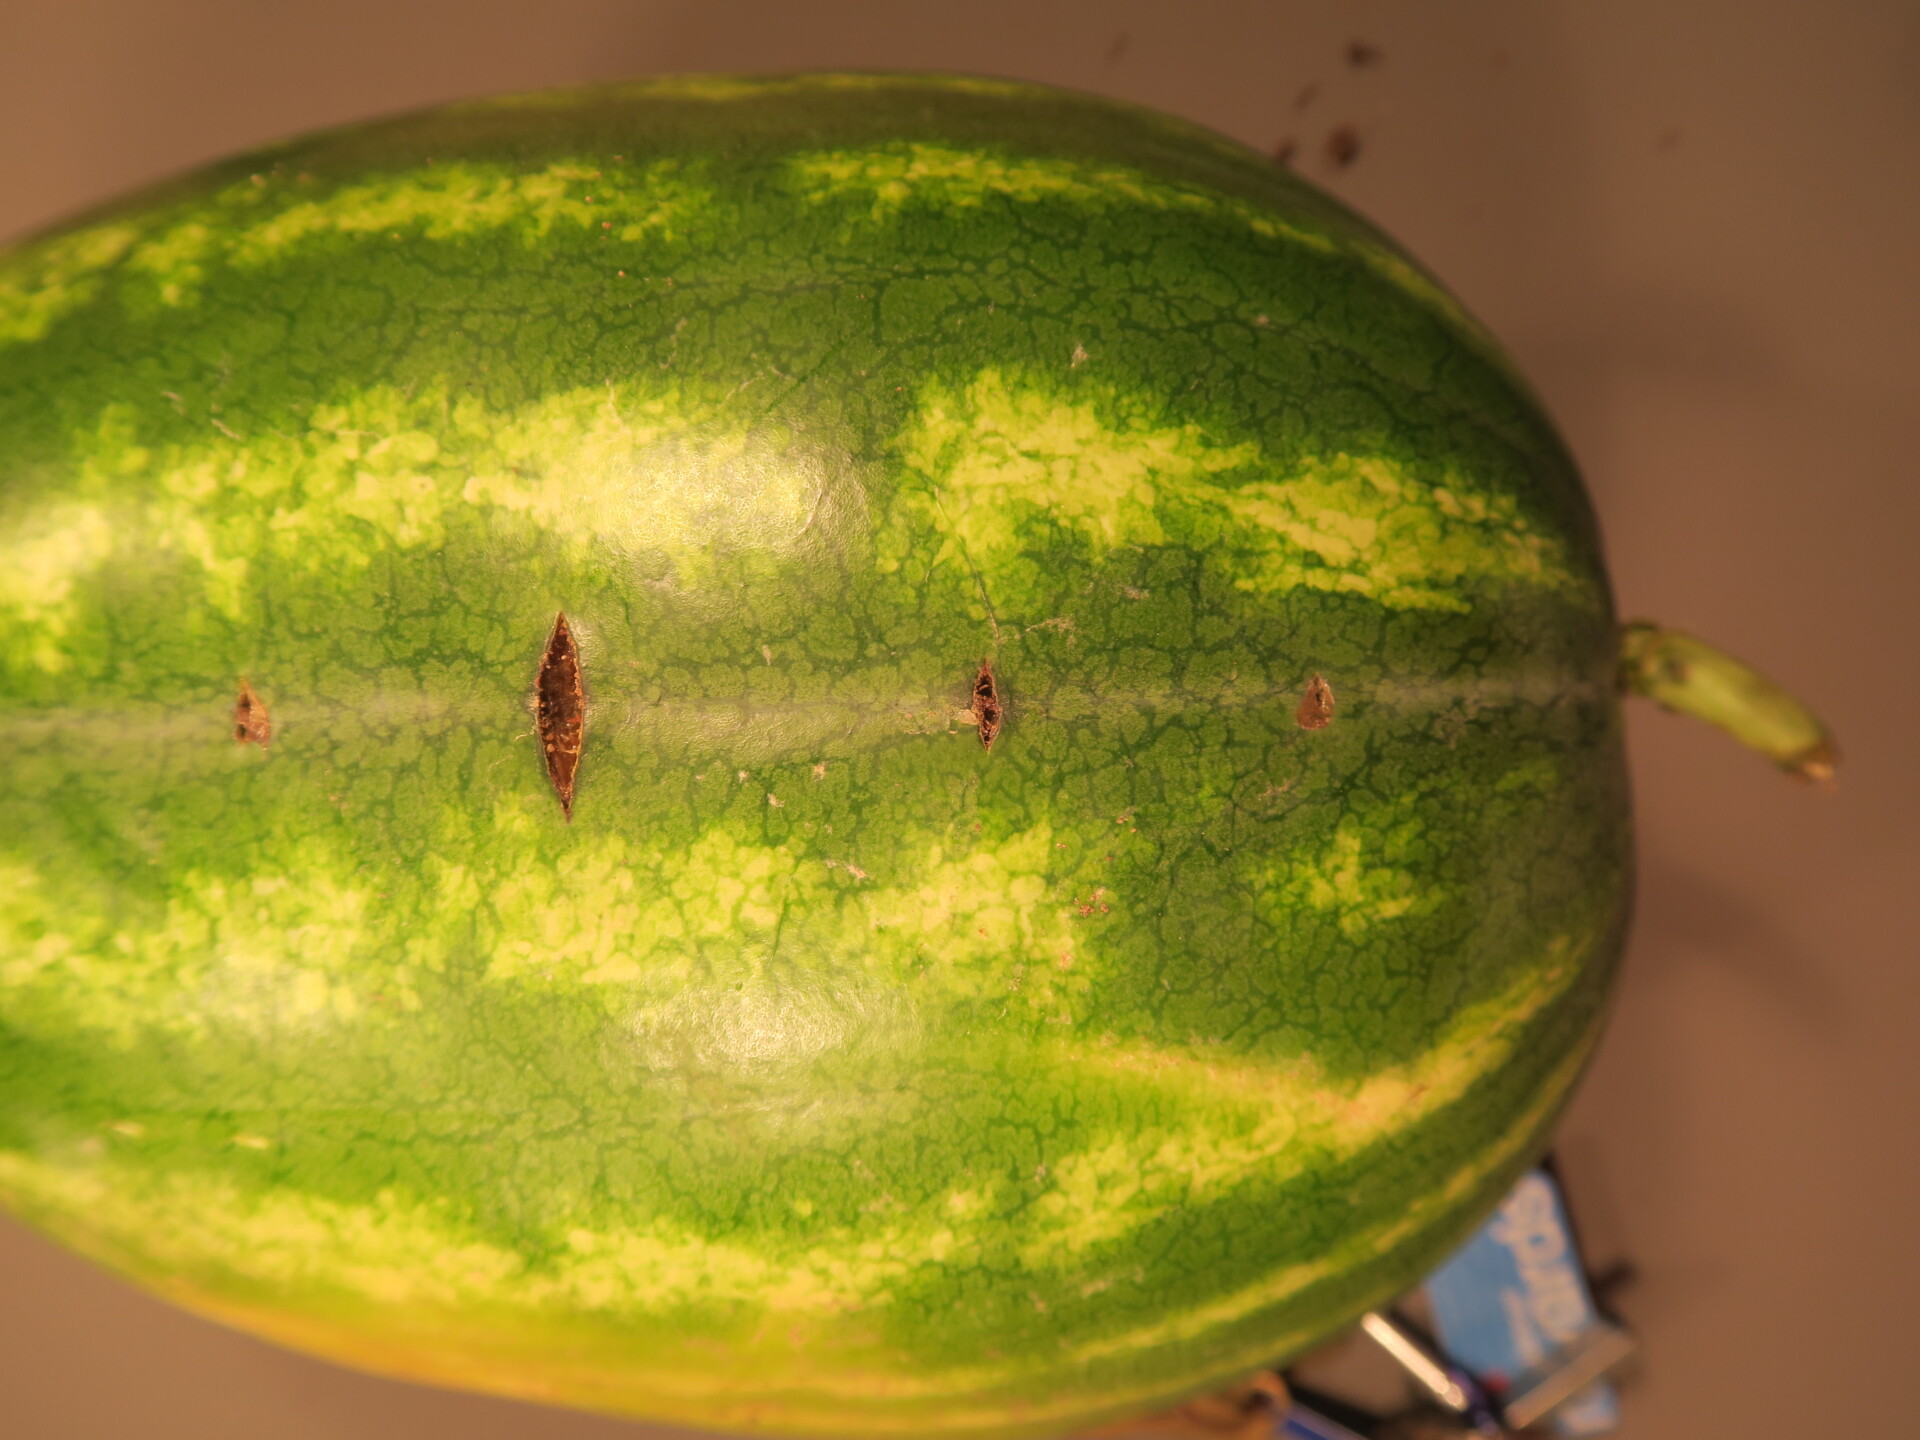 Figure 1. Cross stitch on watermelon.